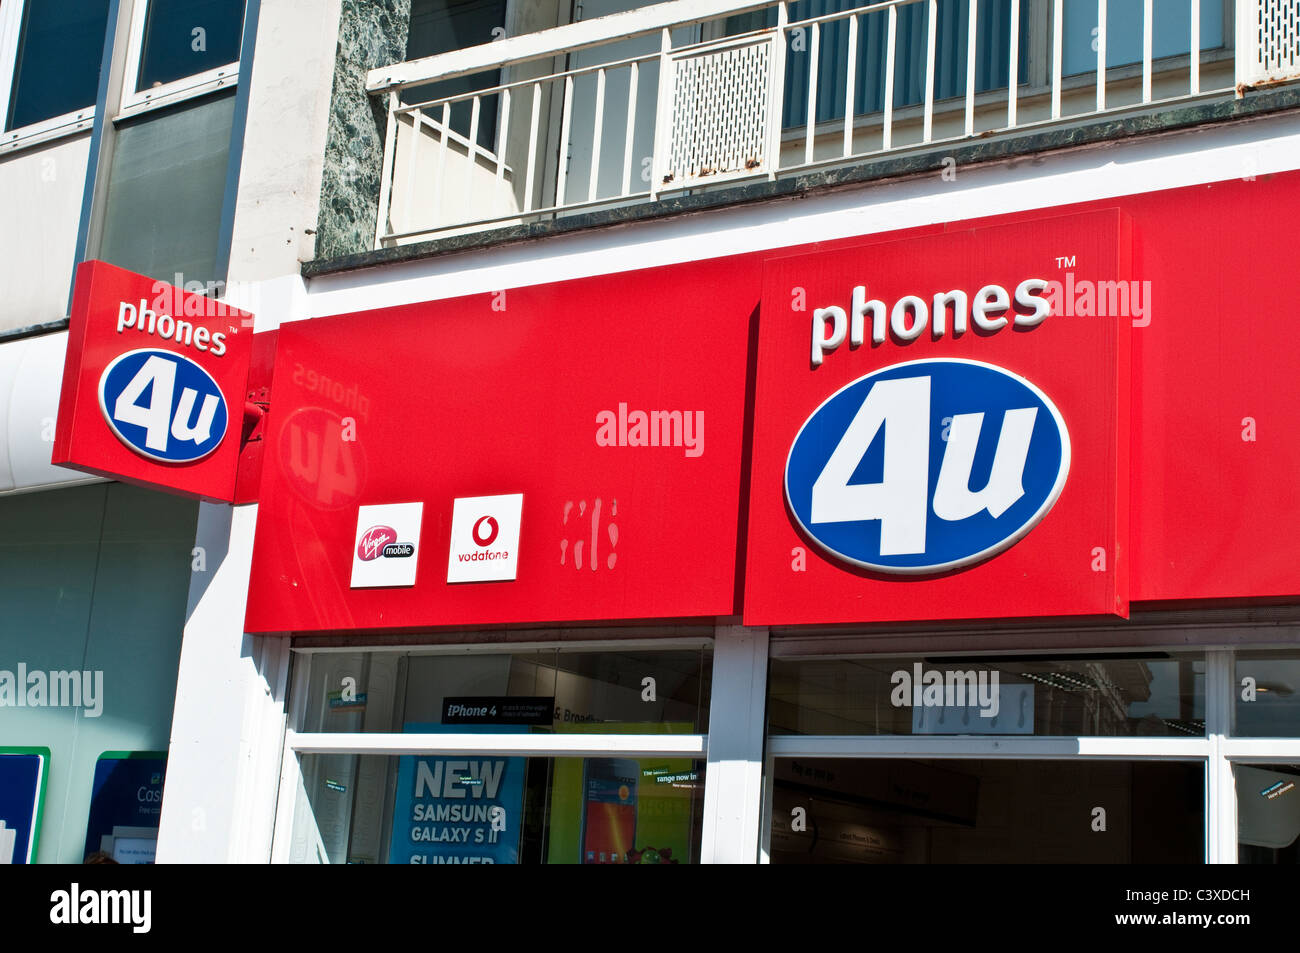 Phones 4u store, Kingston upon Thames, Surrey, UK Stock Photo